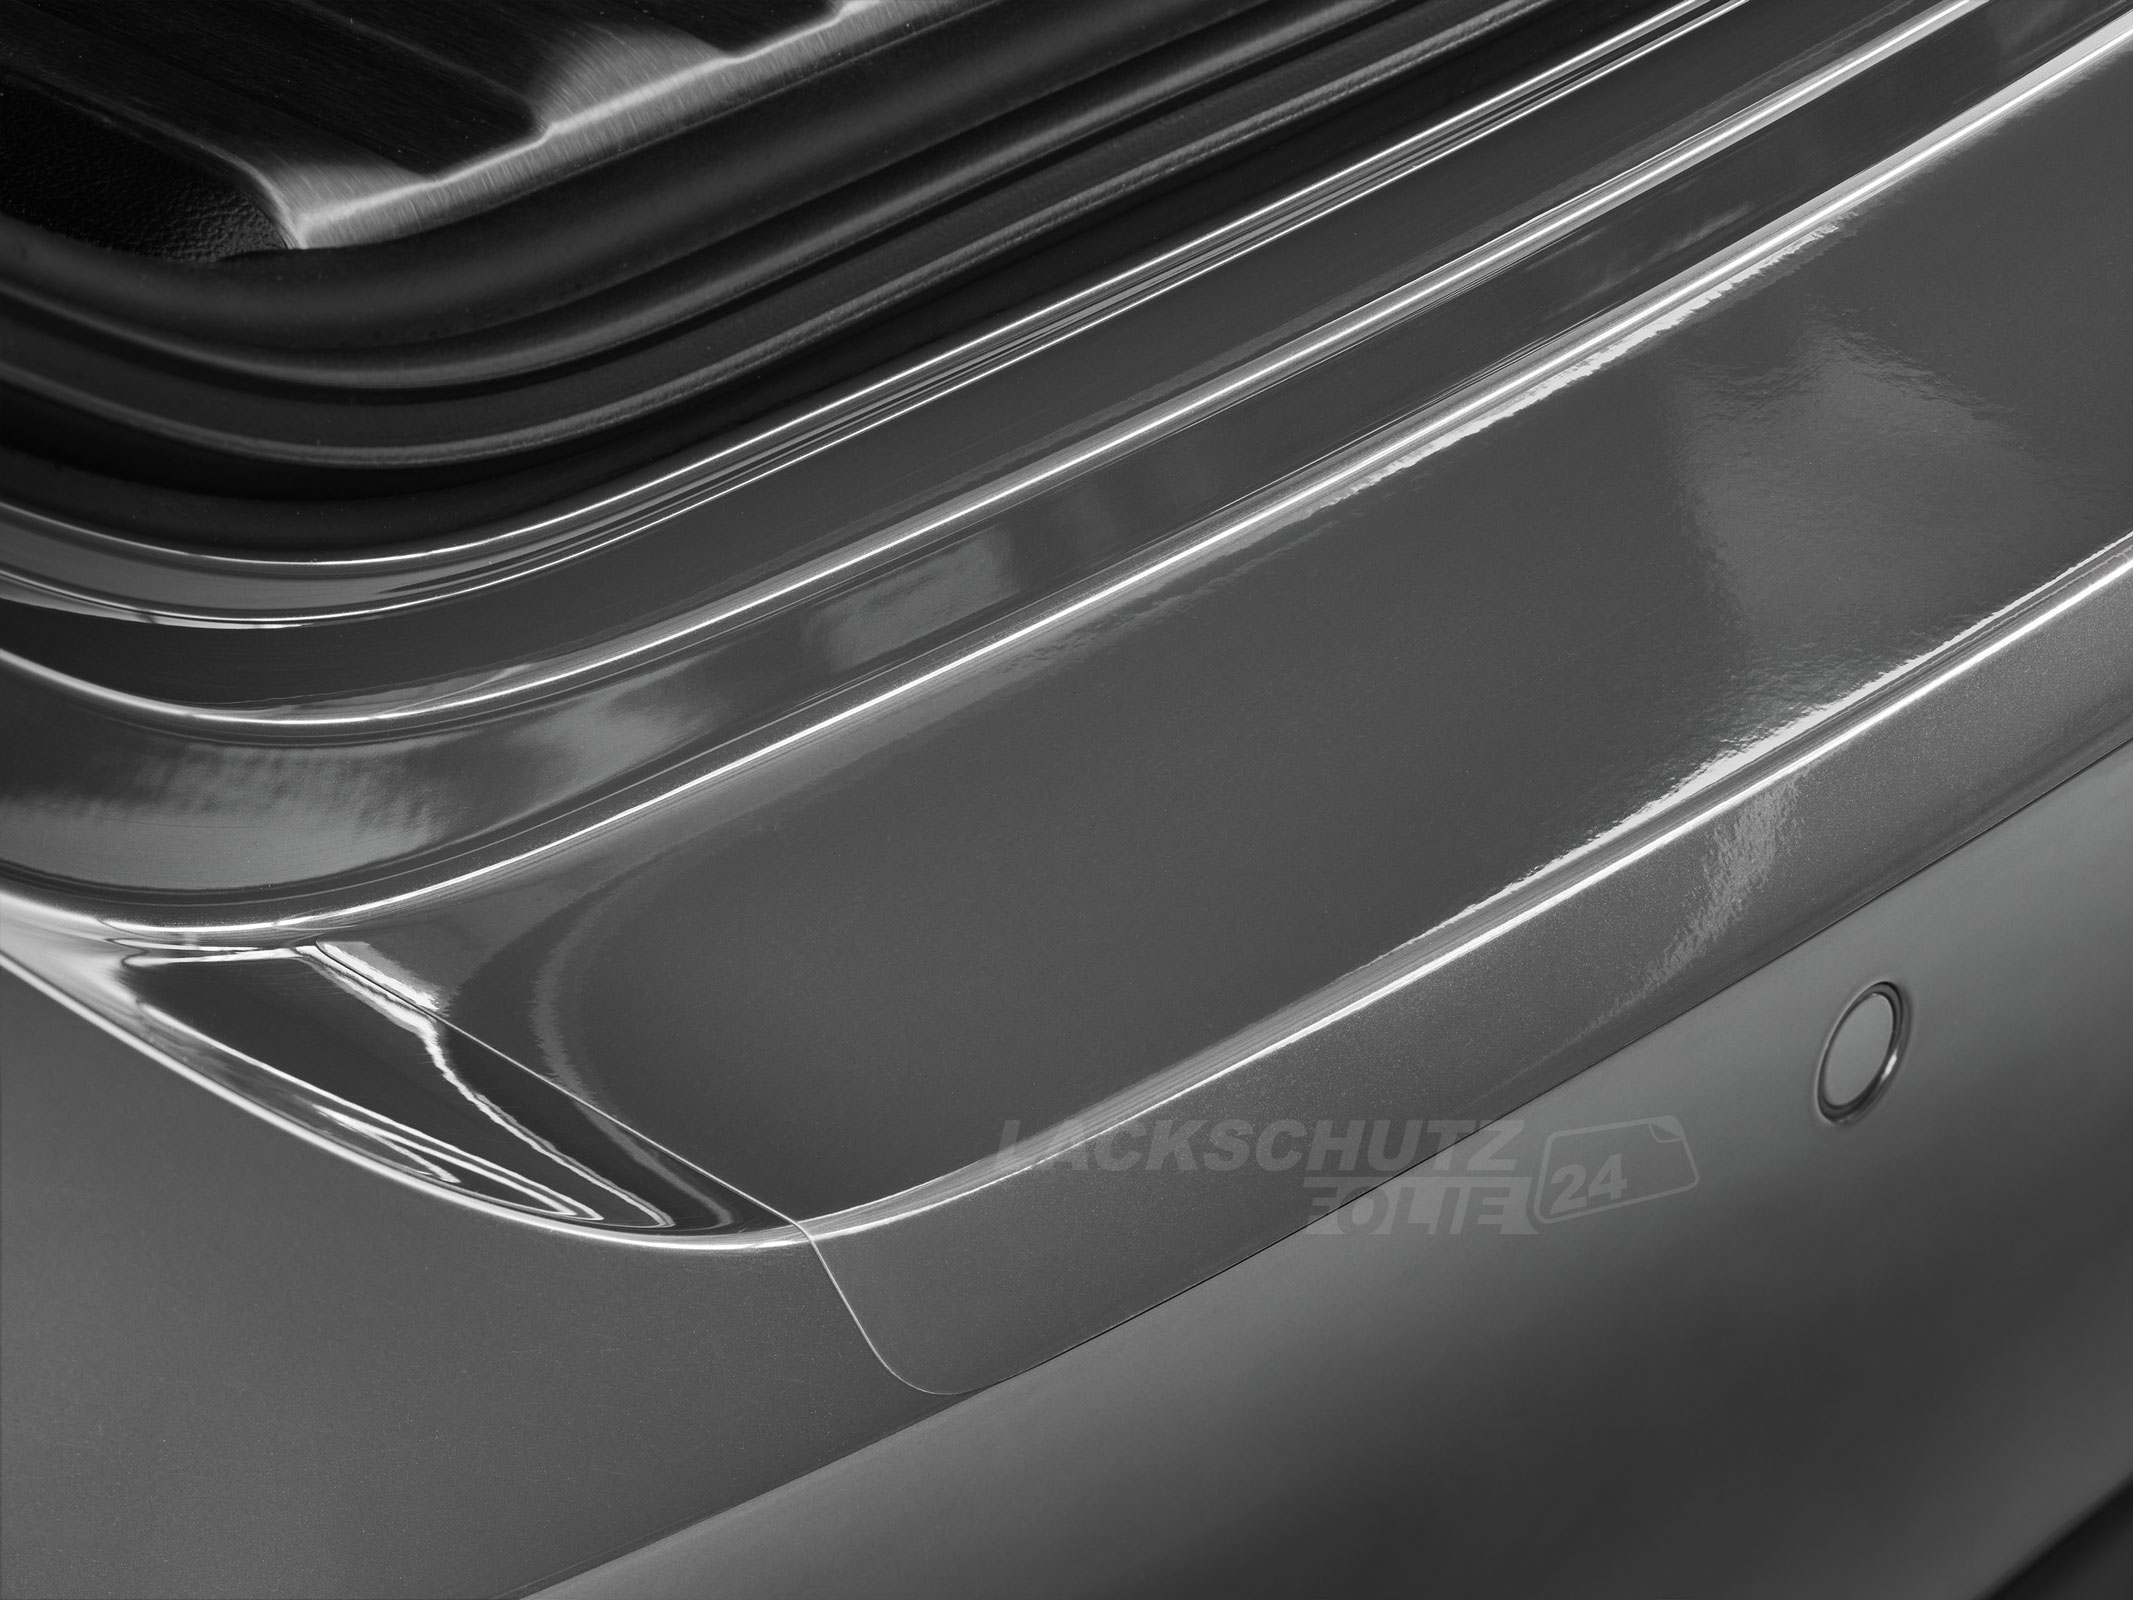 Ladekantenschutzfolie - Transparent Glatt Hochglänzend für Honda Jazz (II) Typ GE, Facelift, BJ 04/2011-09/2015